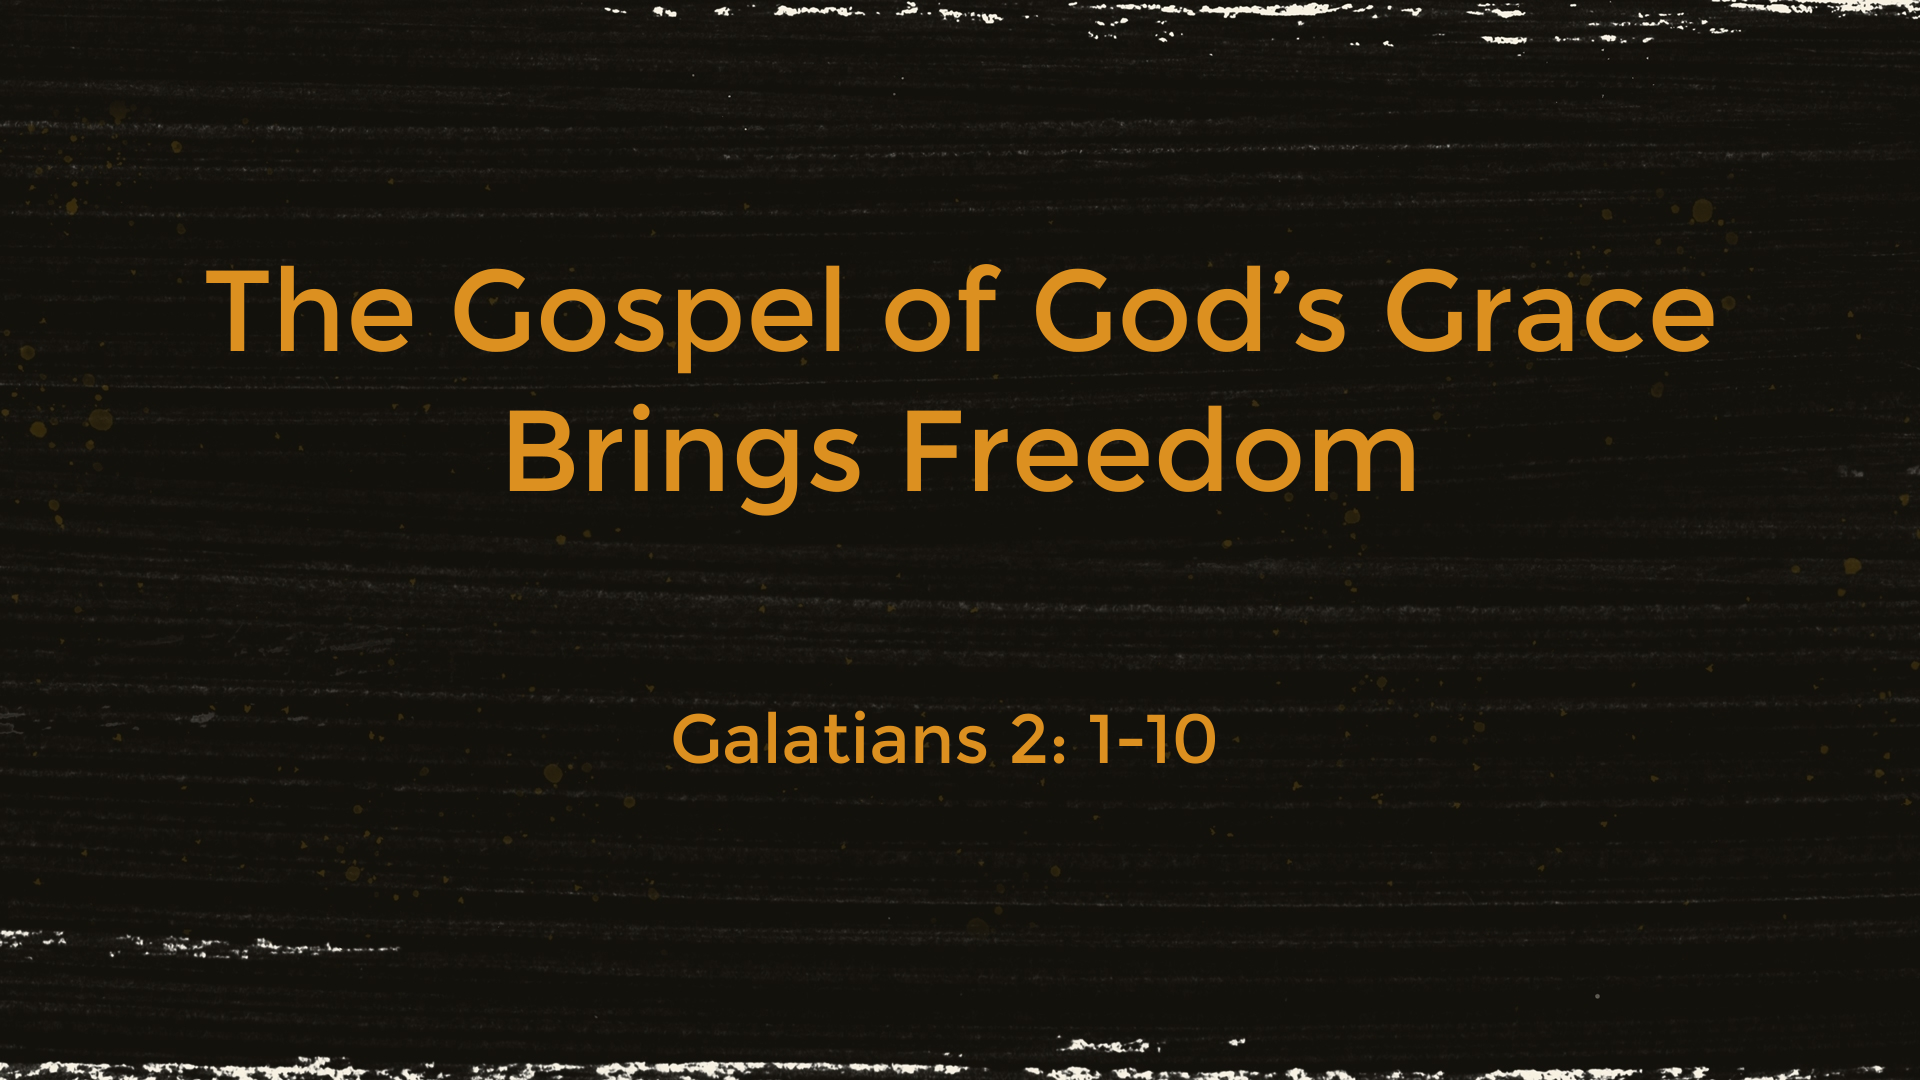 Sep 19, 2021 - The Gospel of God's Grace Brings Freedom (Video) - Galatians 2: 1-10